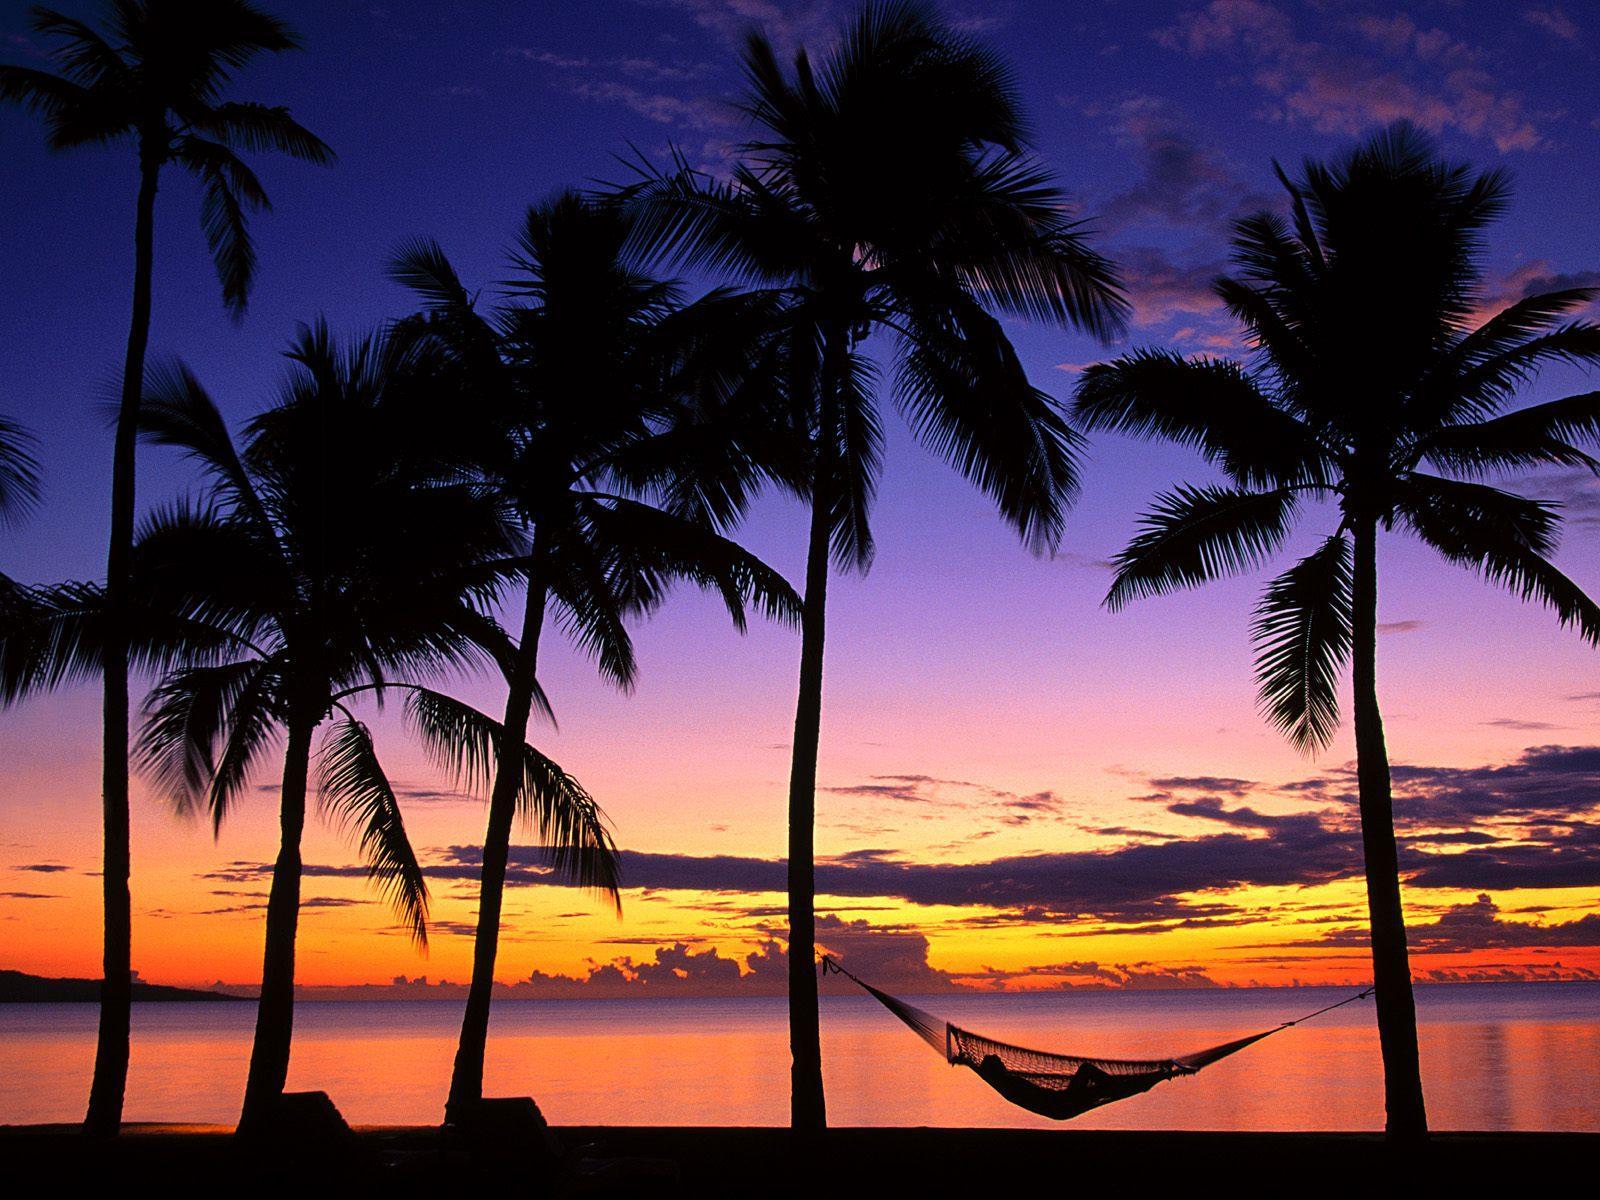 Palm trees at sunset free desktop background wallpaper image